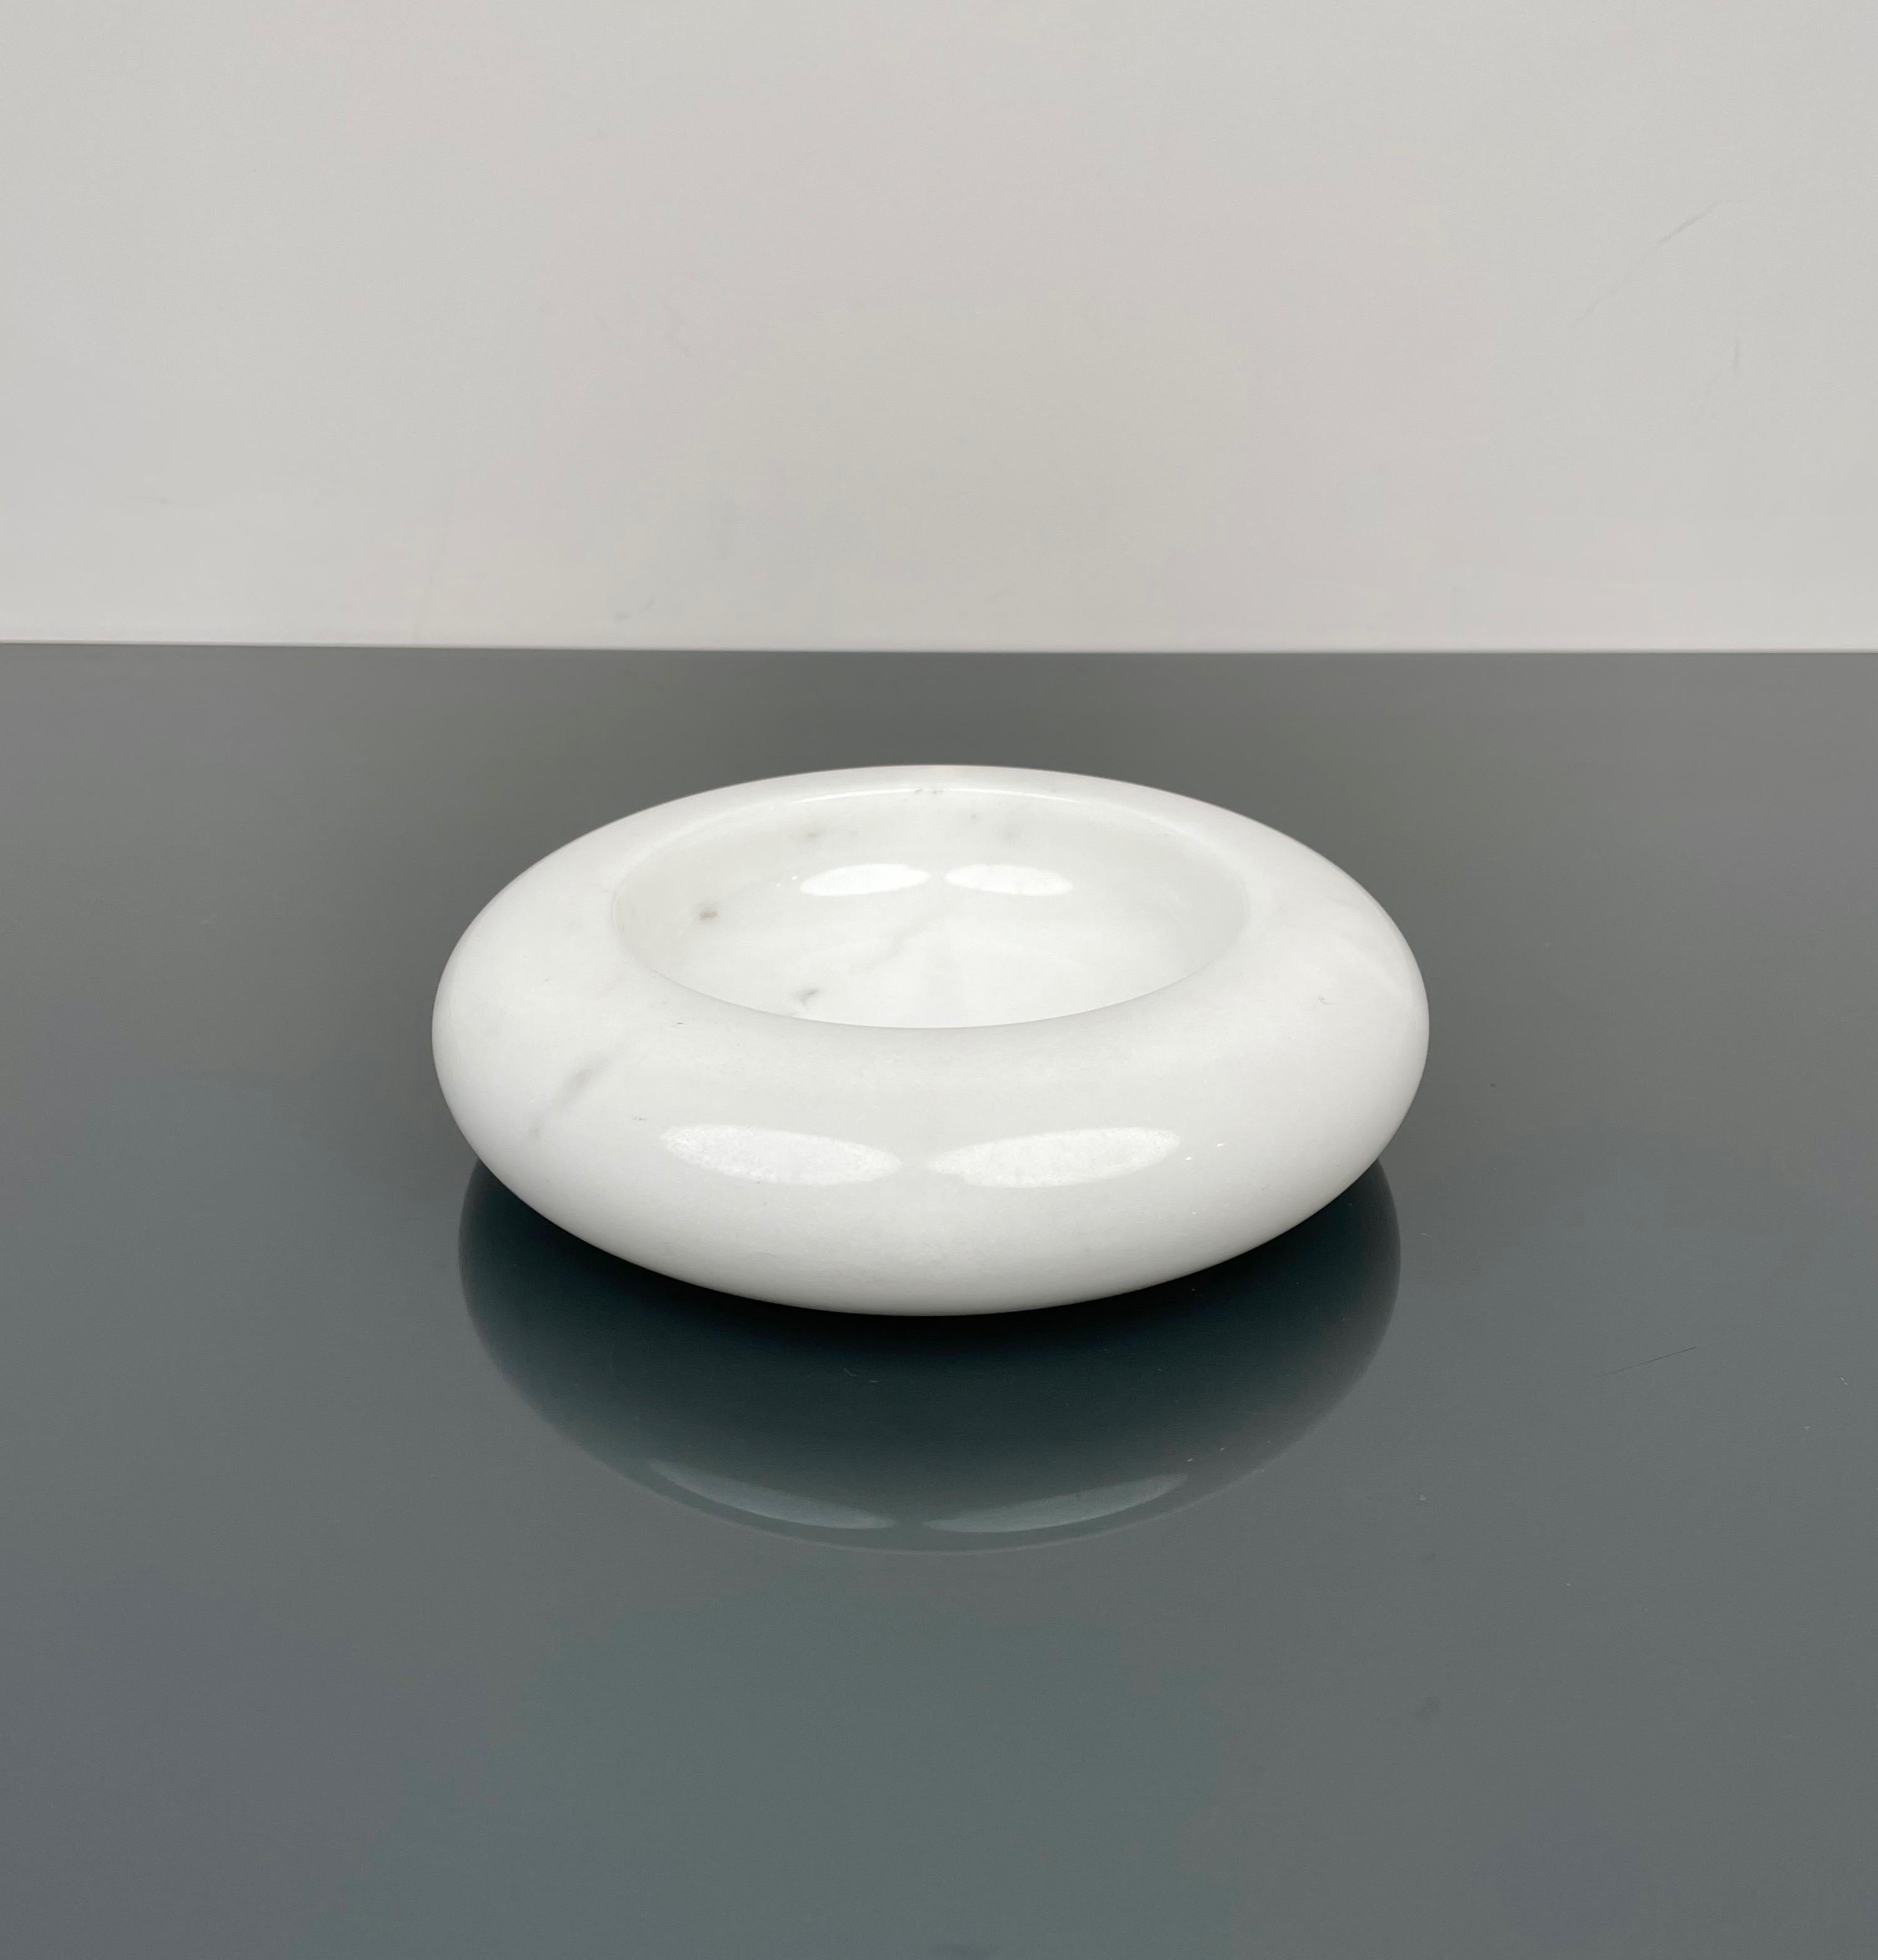 Carrara marble Bianco Carrara Centerpiece - vide-poche - ashtray by Egidio Di Rosa and Pier Alessandro Giusti for Up & Up, 1970s.

